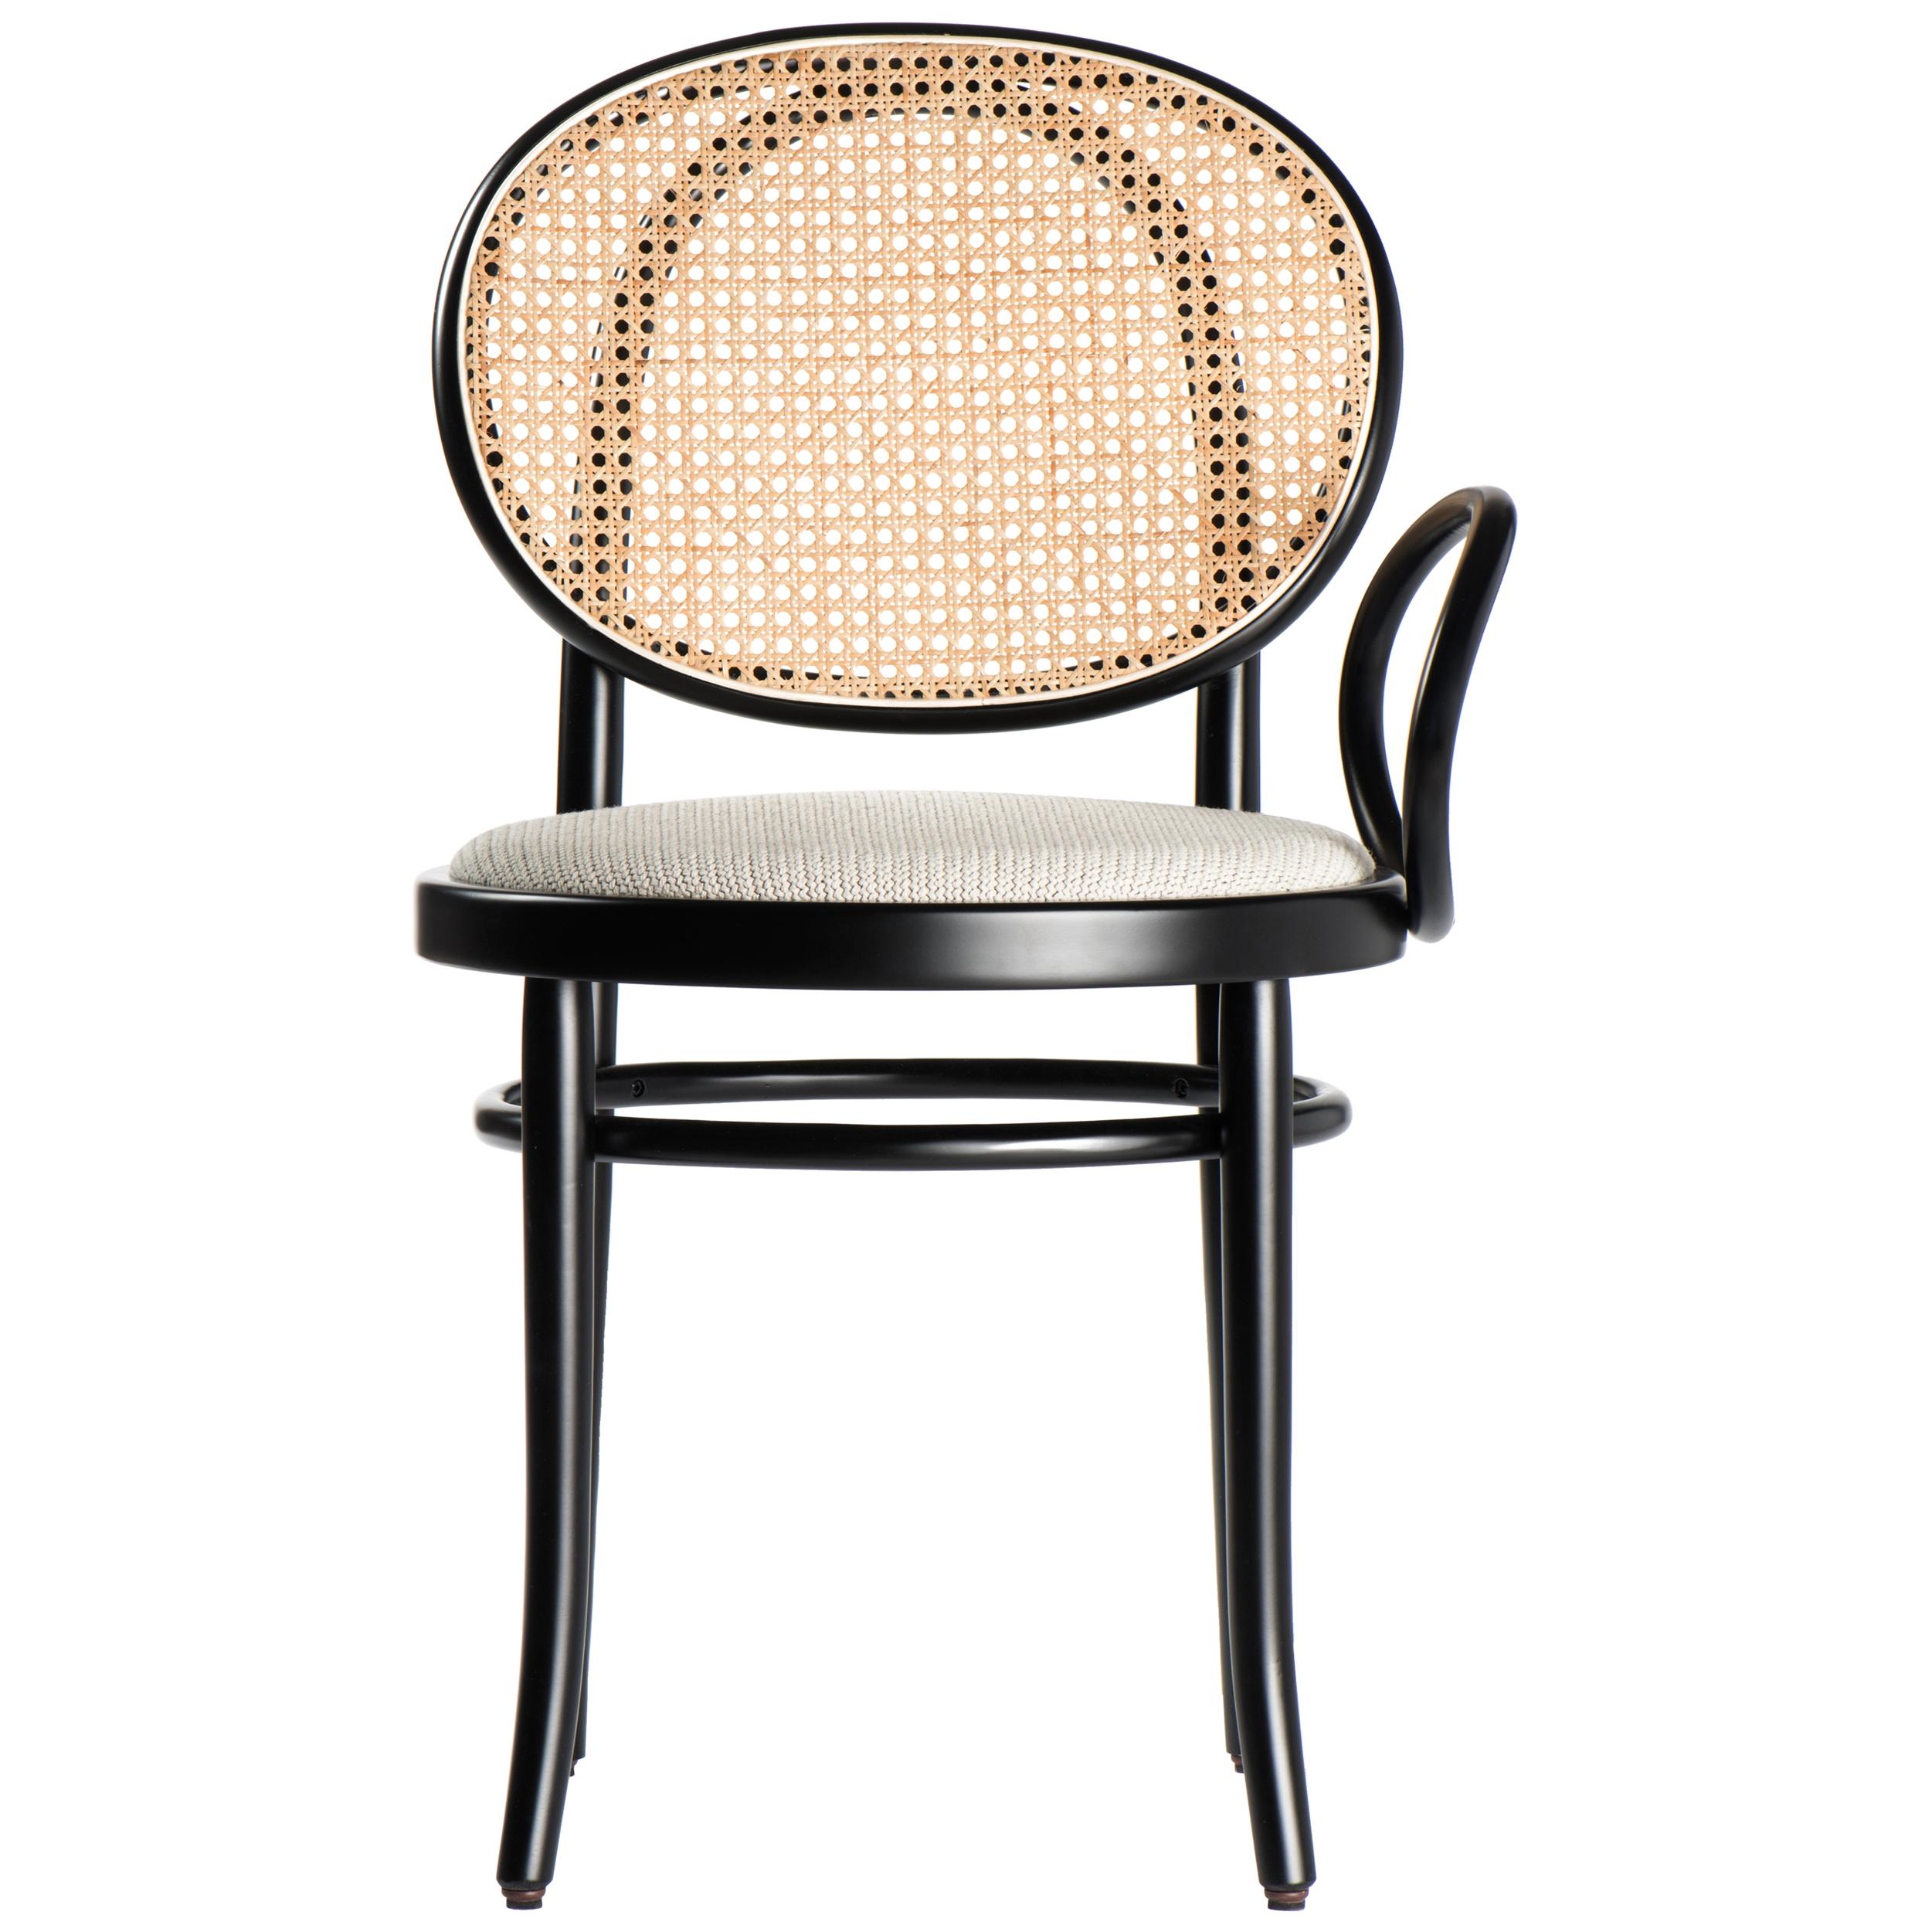 Gebrüder Thonet Vienna GmbH N.0 Single Armrest Chair in Black with Cane Backrest For Sale